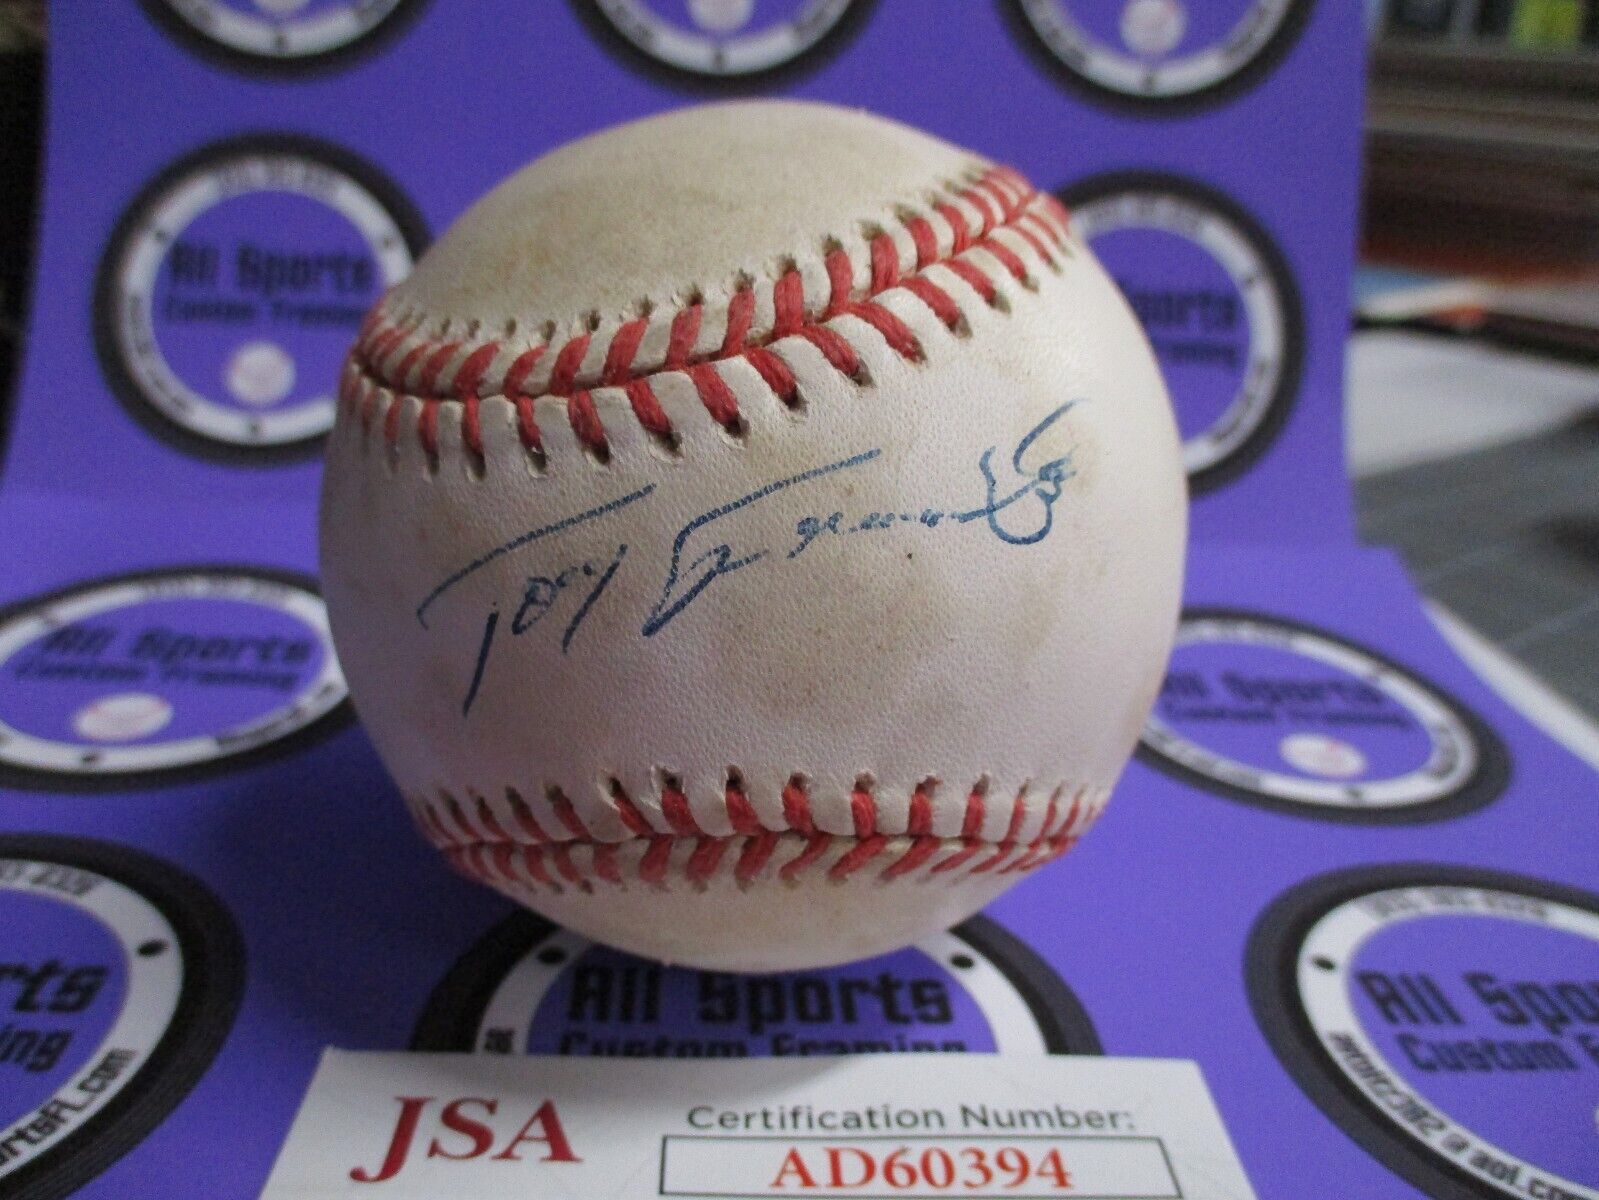 Tony Fernandez Toronto Blue Jays Autographed Baseball JSA #AD60394 Toned